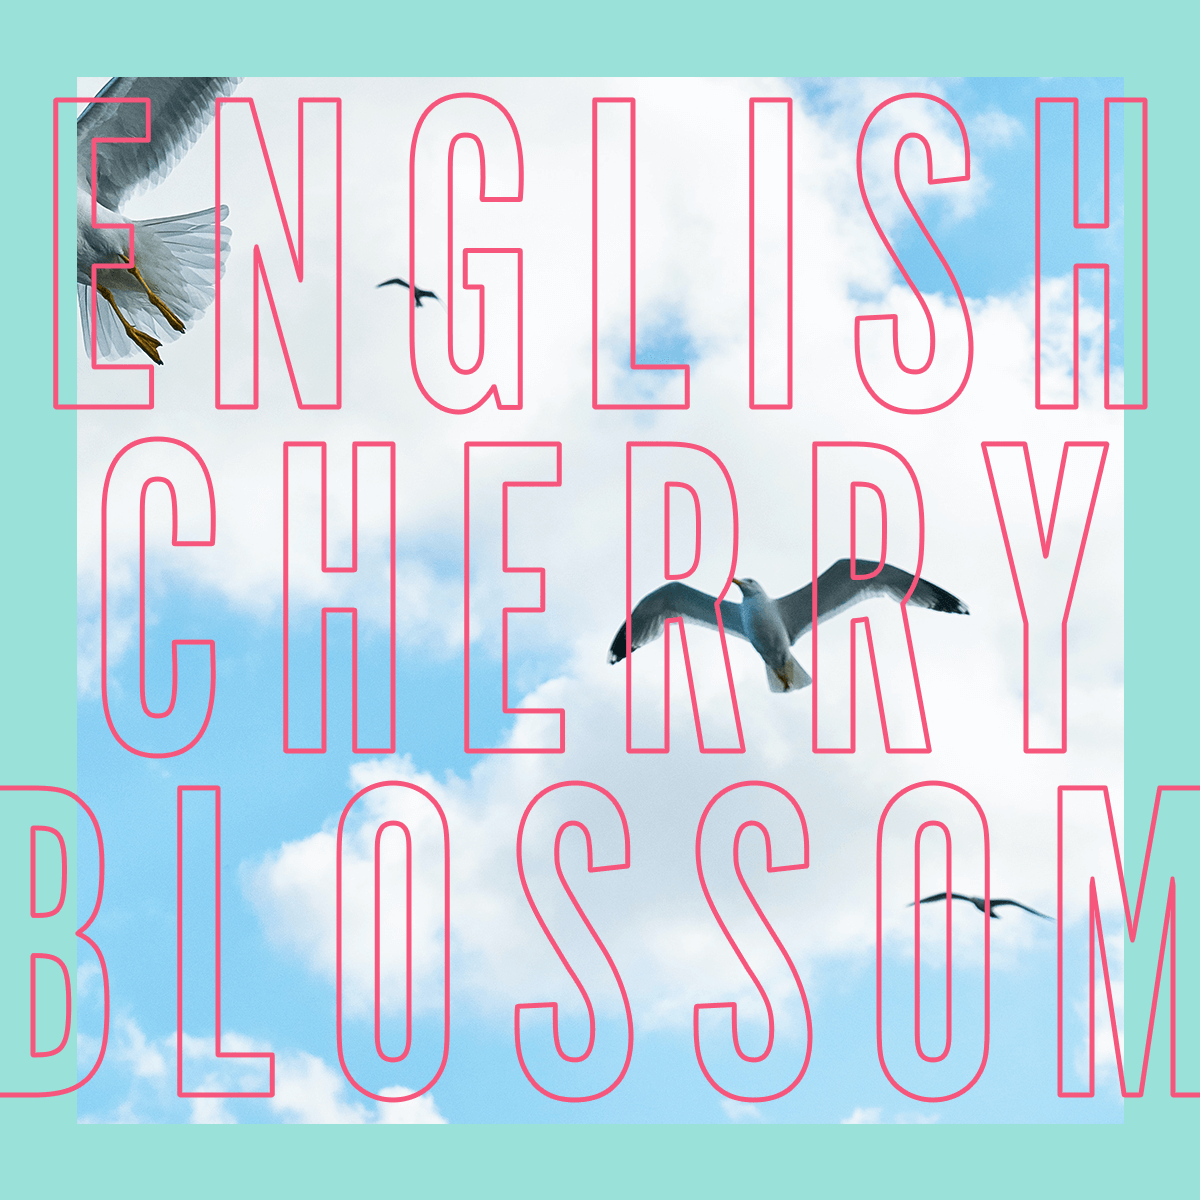 English Cherry Blossom Fragrance 0.3oz